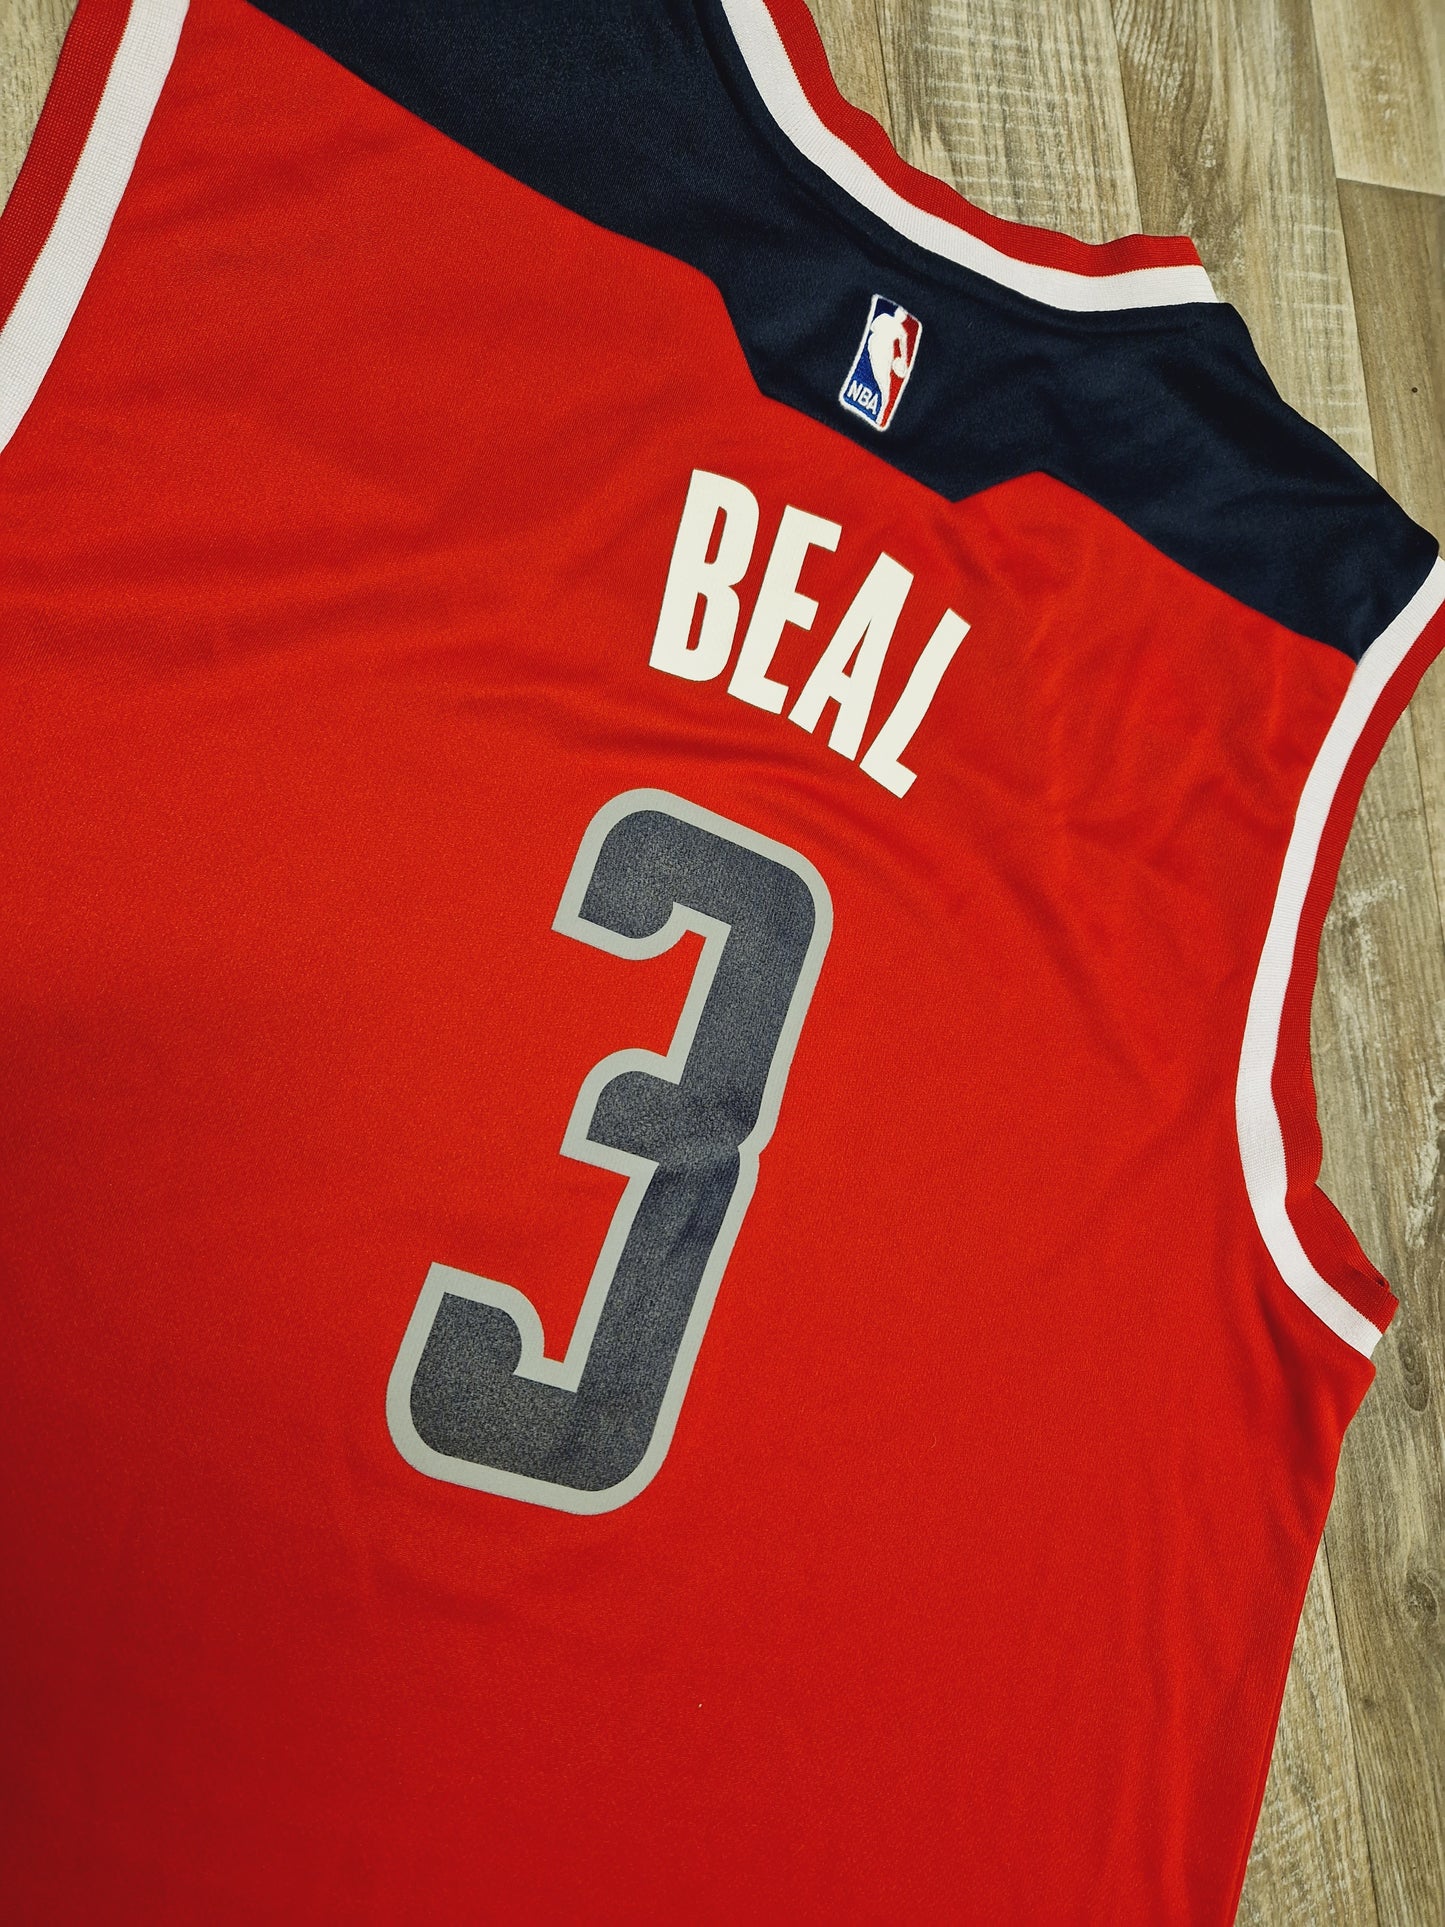 Bradley Beal Washington Wizards Jersey Size Medium